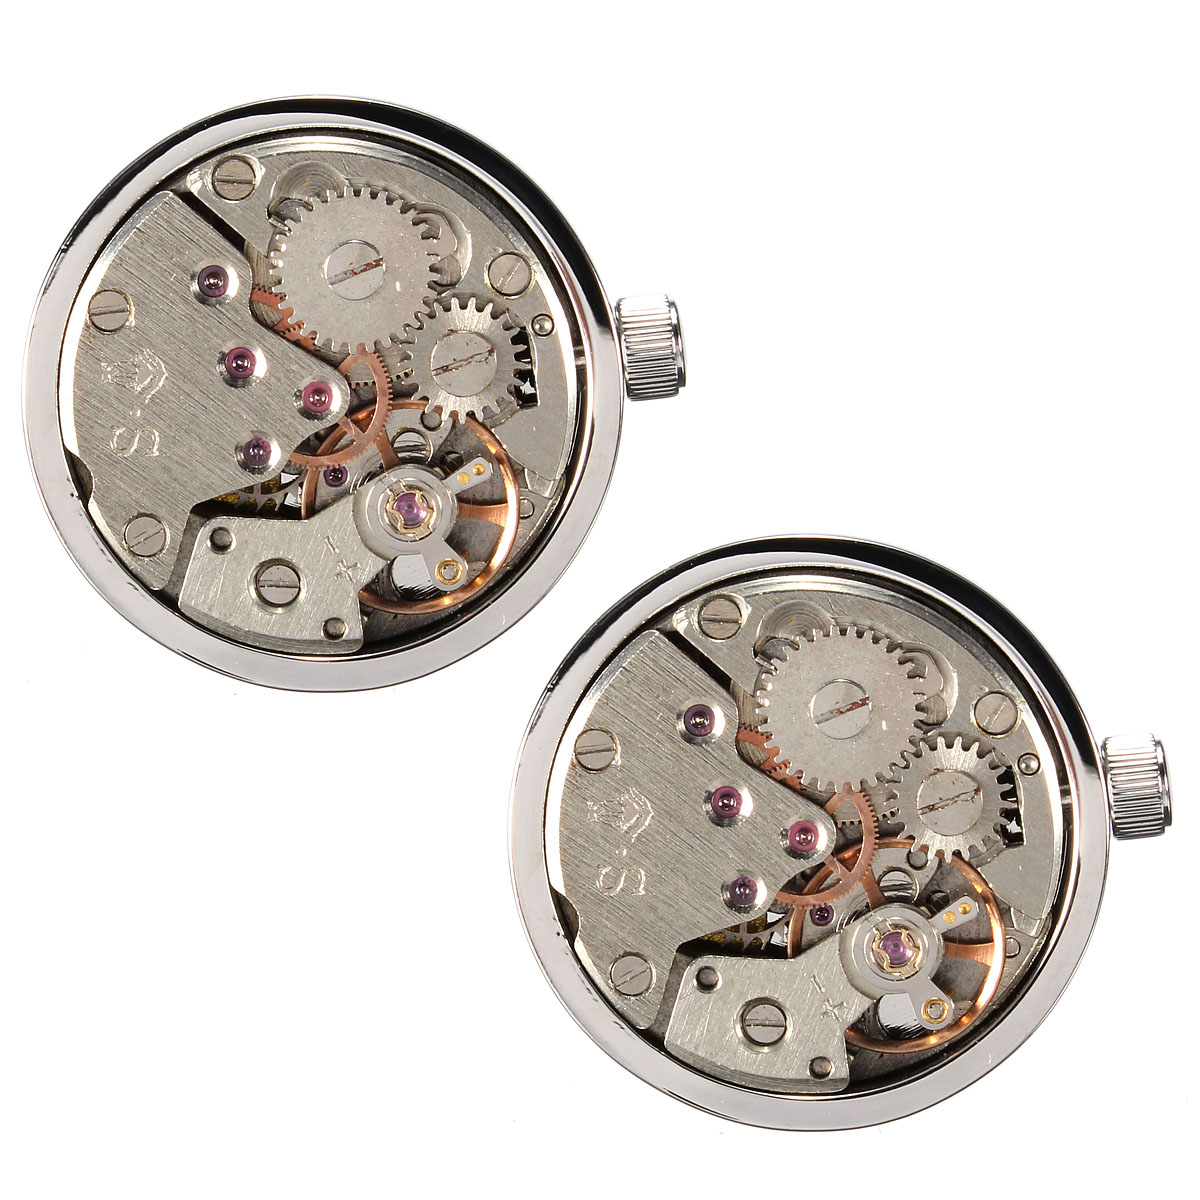 Men-Male-Silver-Mechanical-Watch-Pattern-Cuff-Links-Wedding-Gift-Suit-Shirt-Accessories-1024642